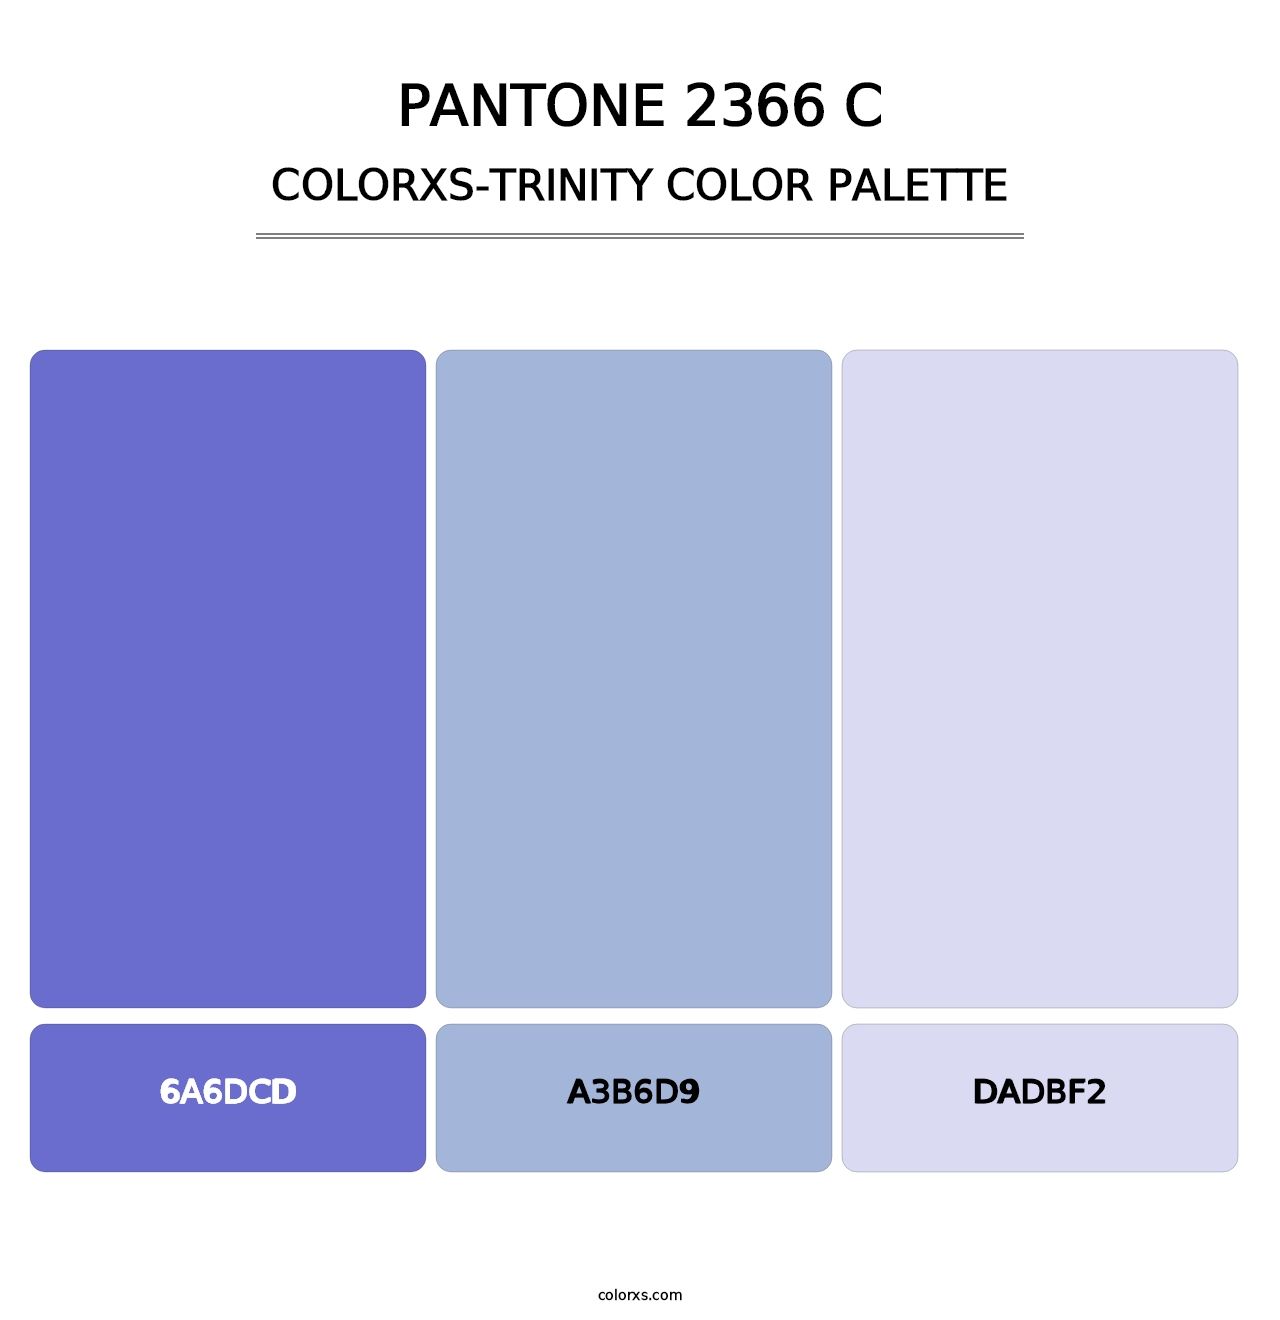 PANTONE 2366 C - Colorxs Trinity Palette